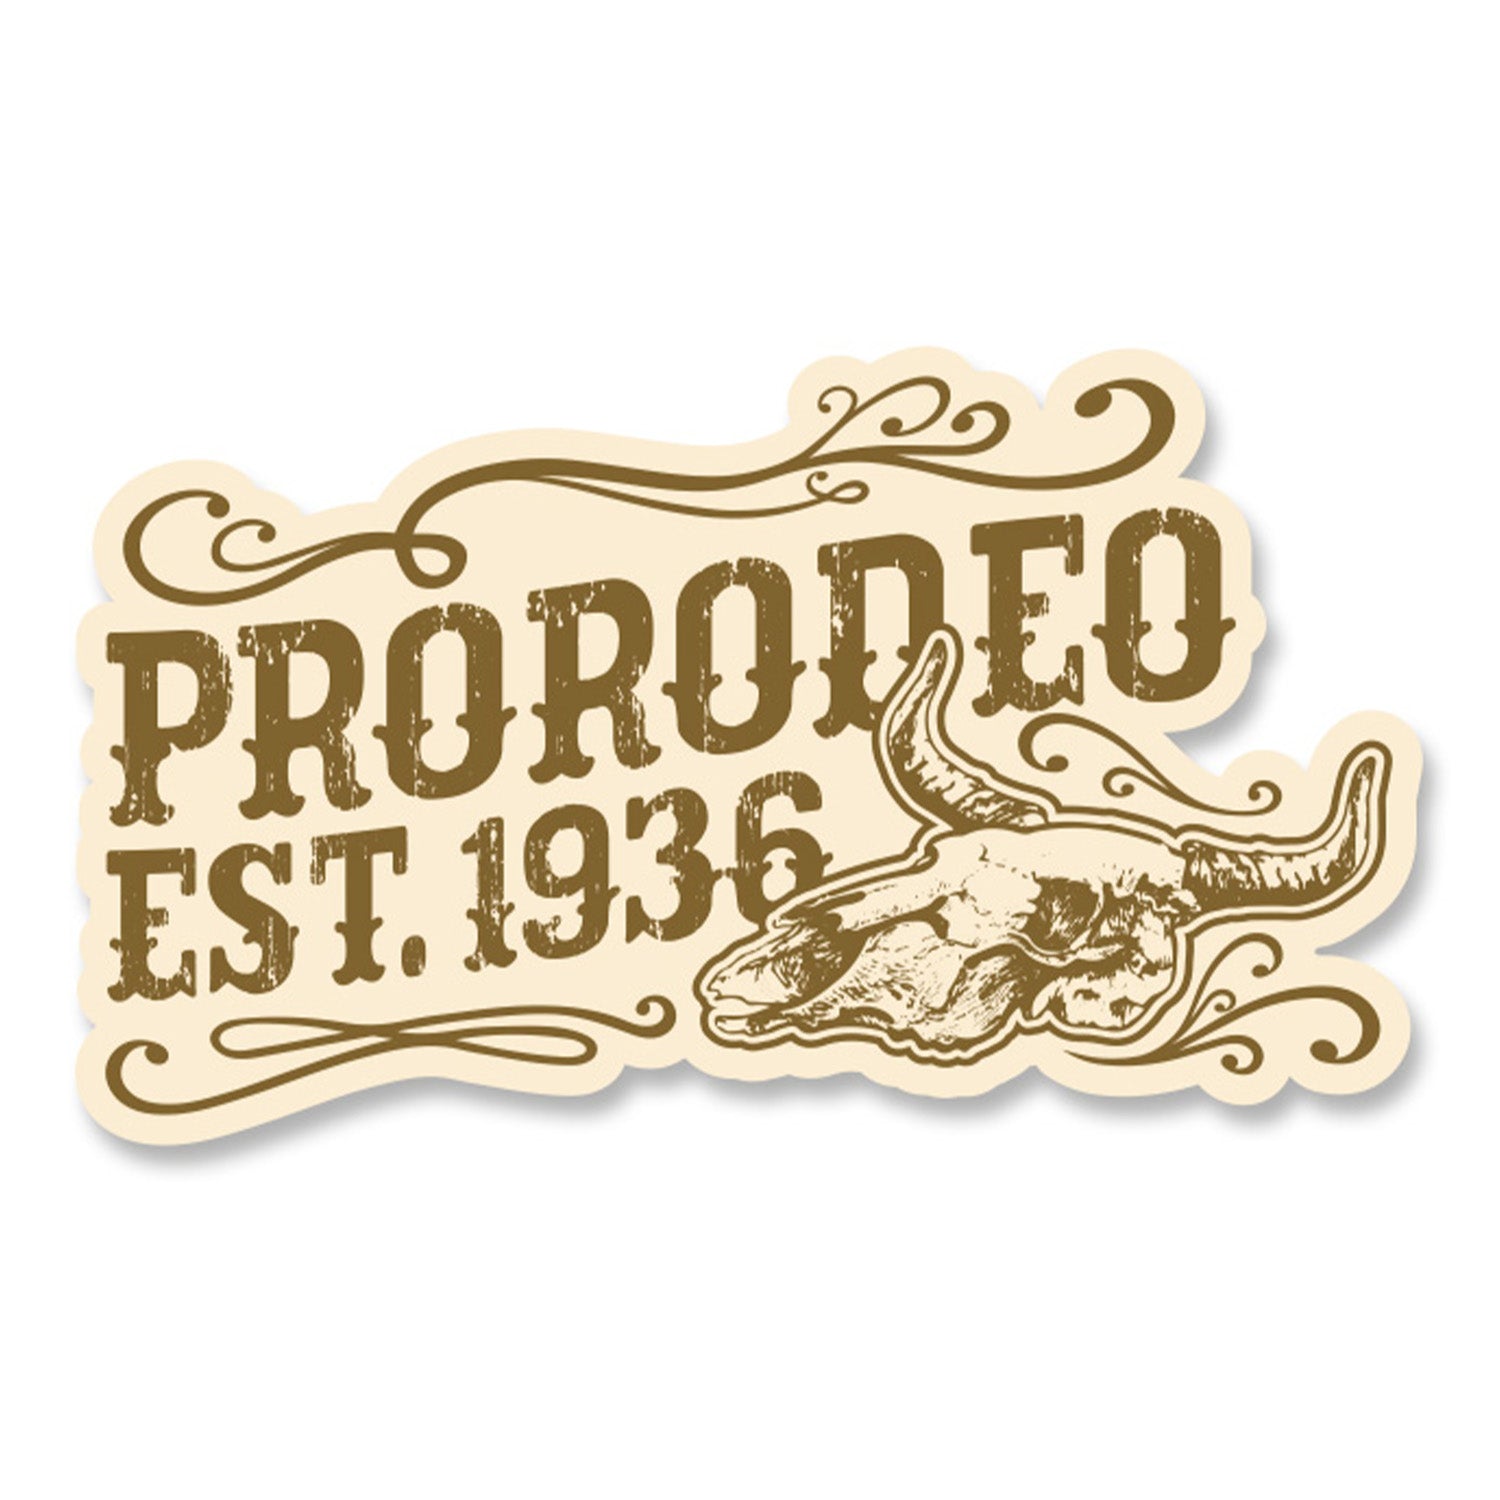 PRORODEO Est. 1936 Sticker - Front View